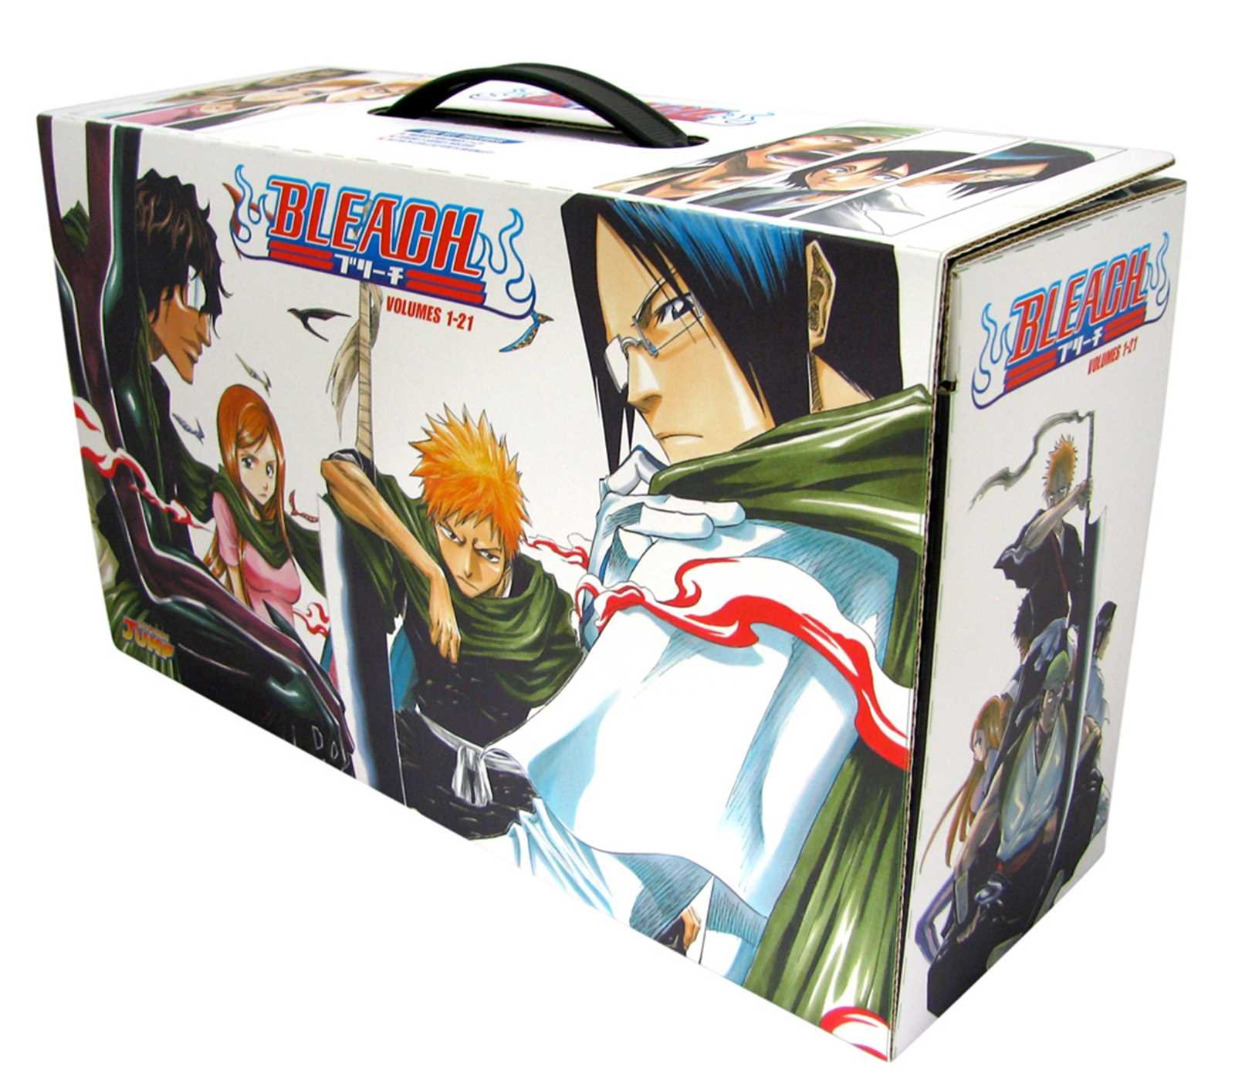 Bleach Manga Box Set 1 - Volumes 1-21